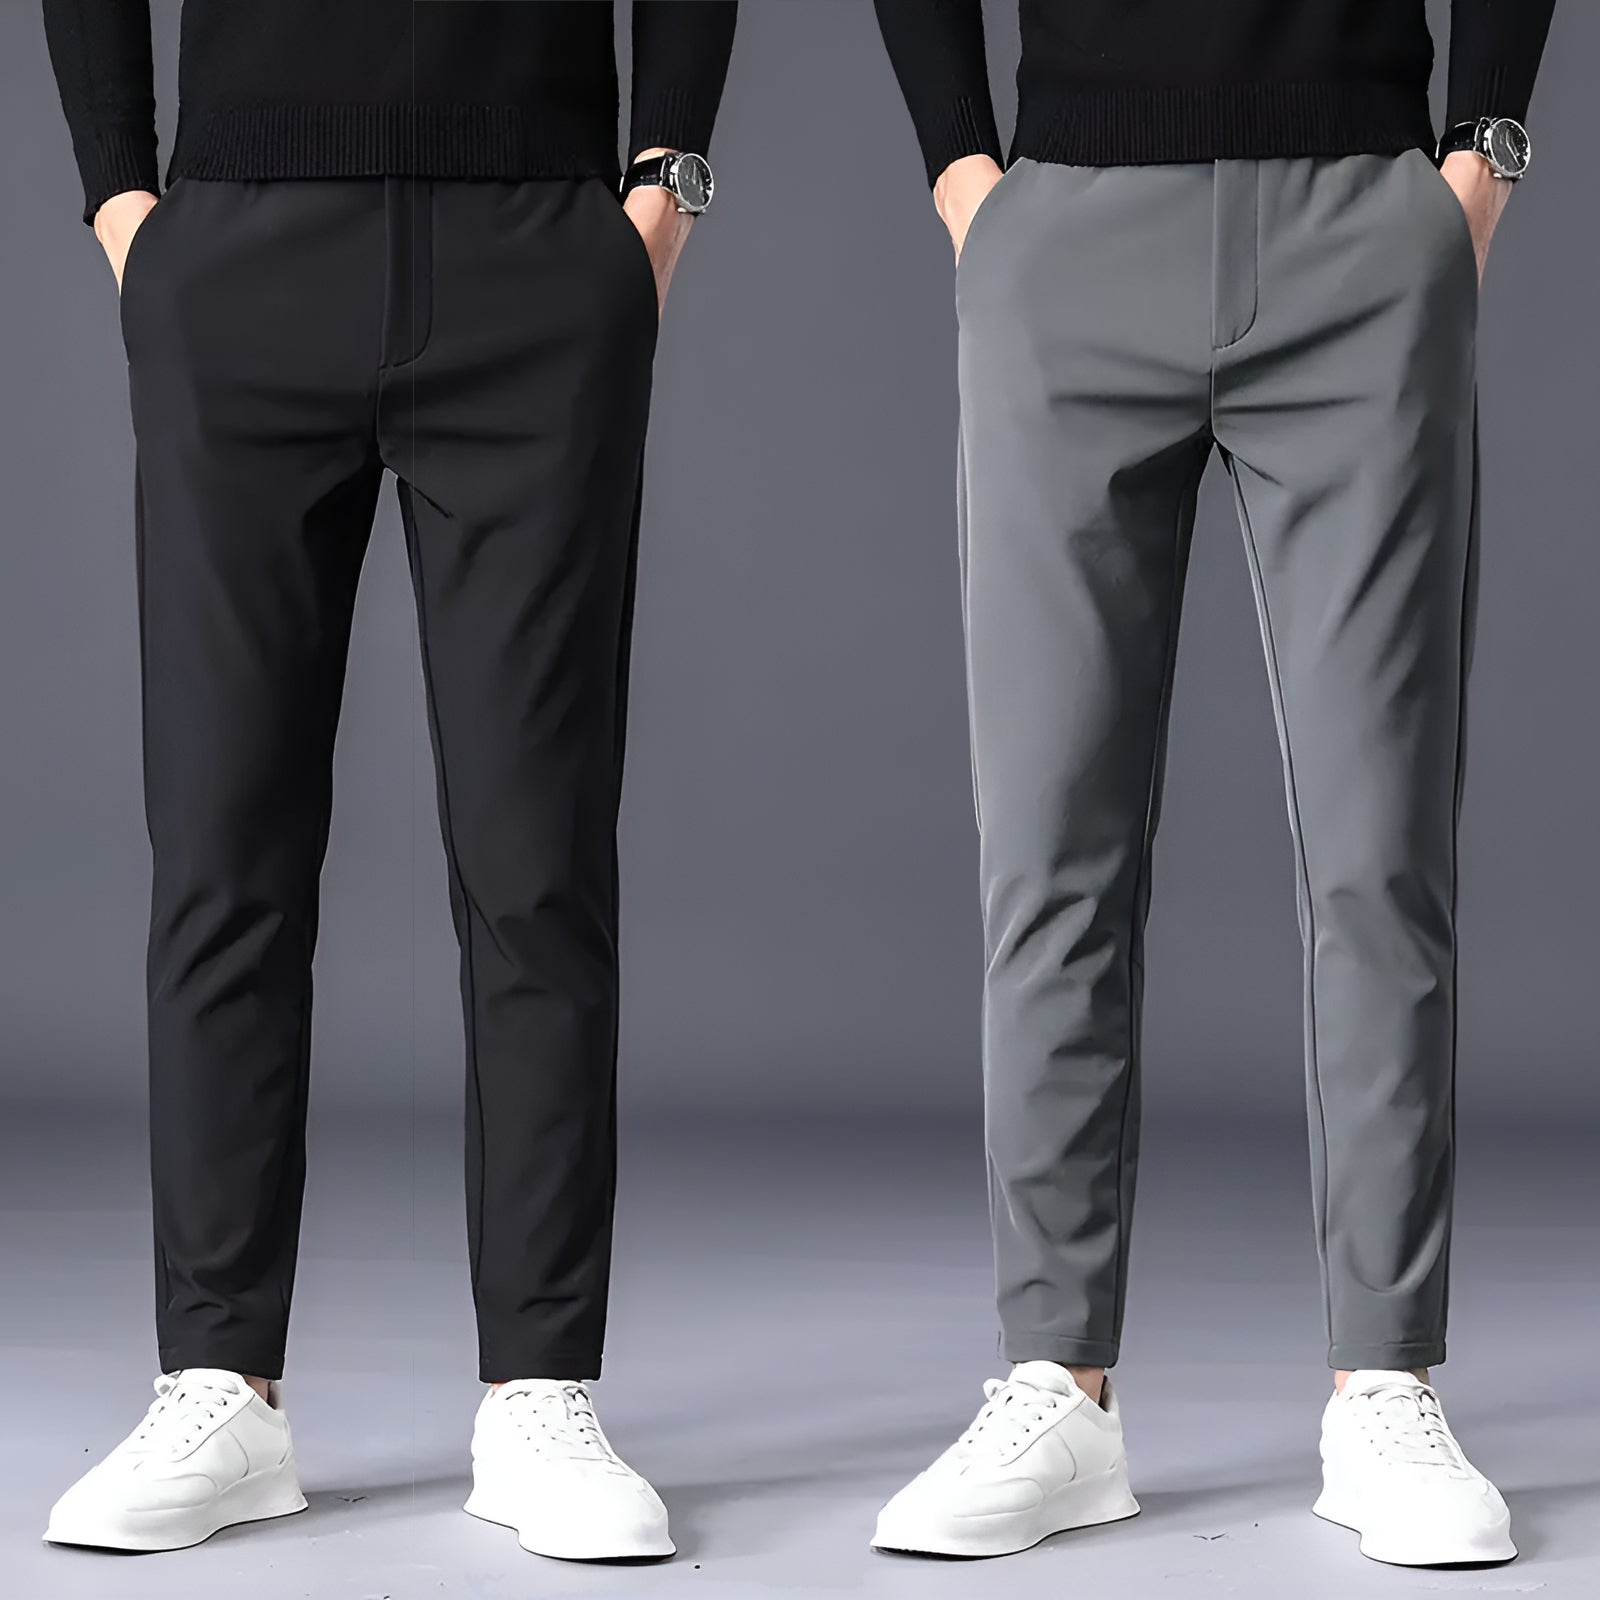 fcity.in - We Perfect Men Casual Regular Fit Solid Trouser Combo For Men Men